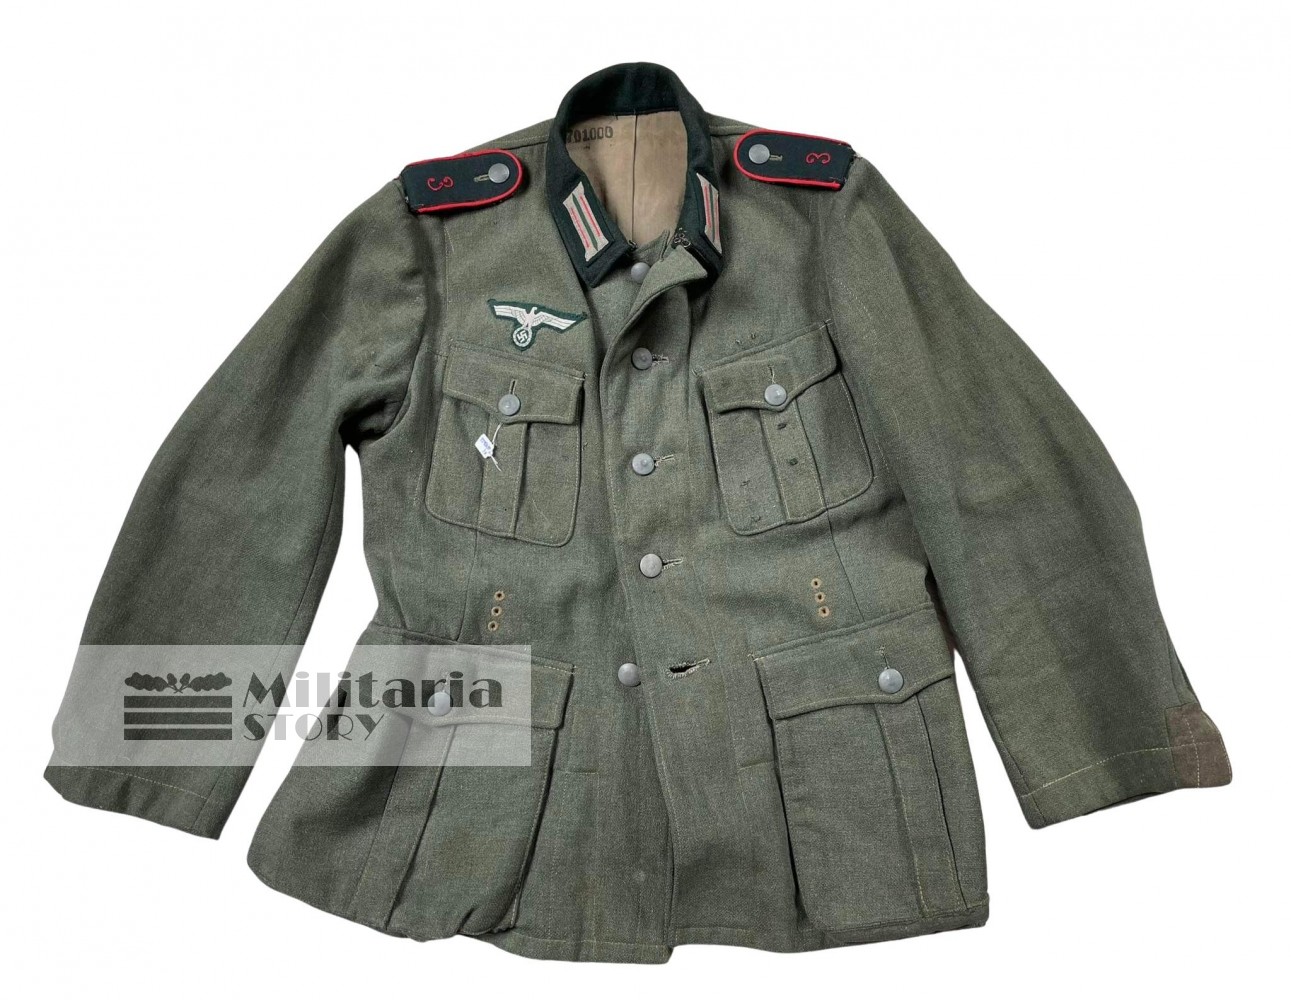 Heer m36 uniform of Unit "3"